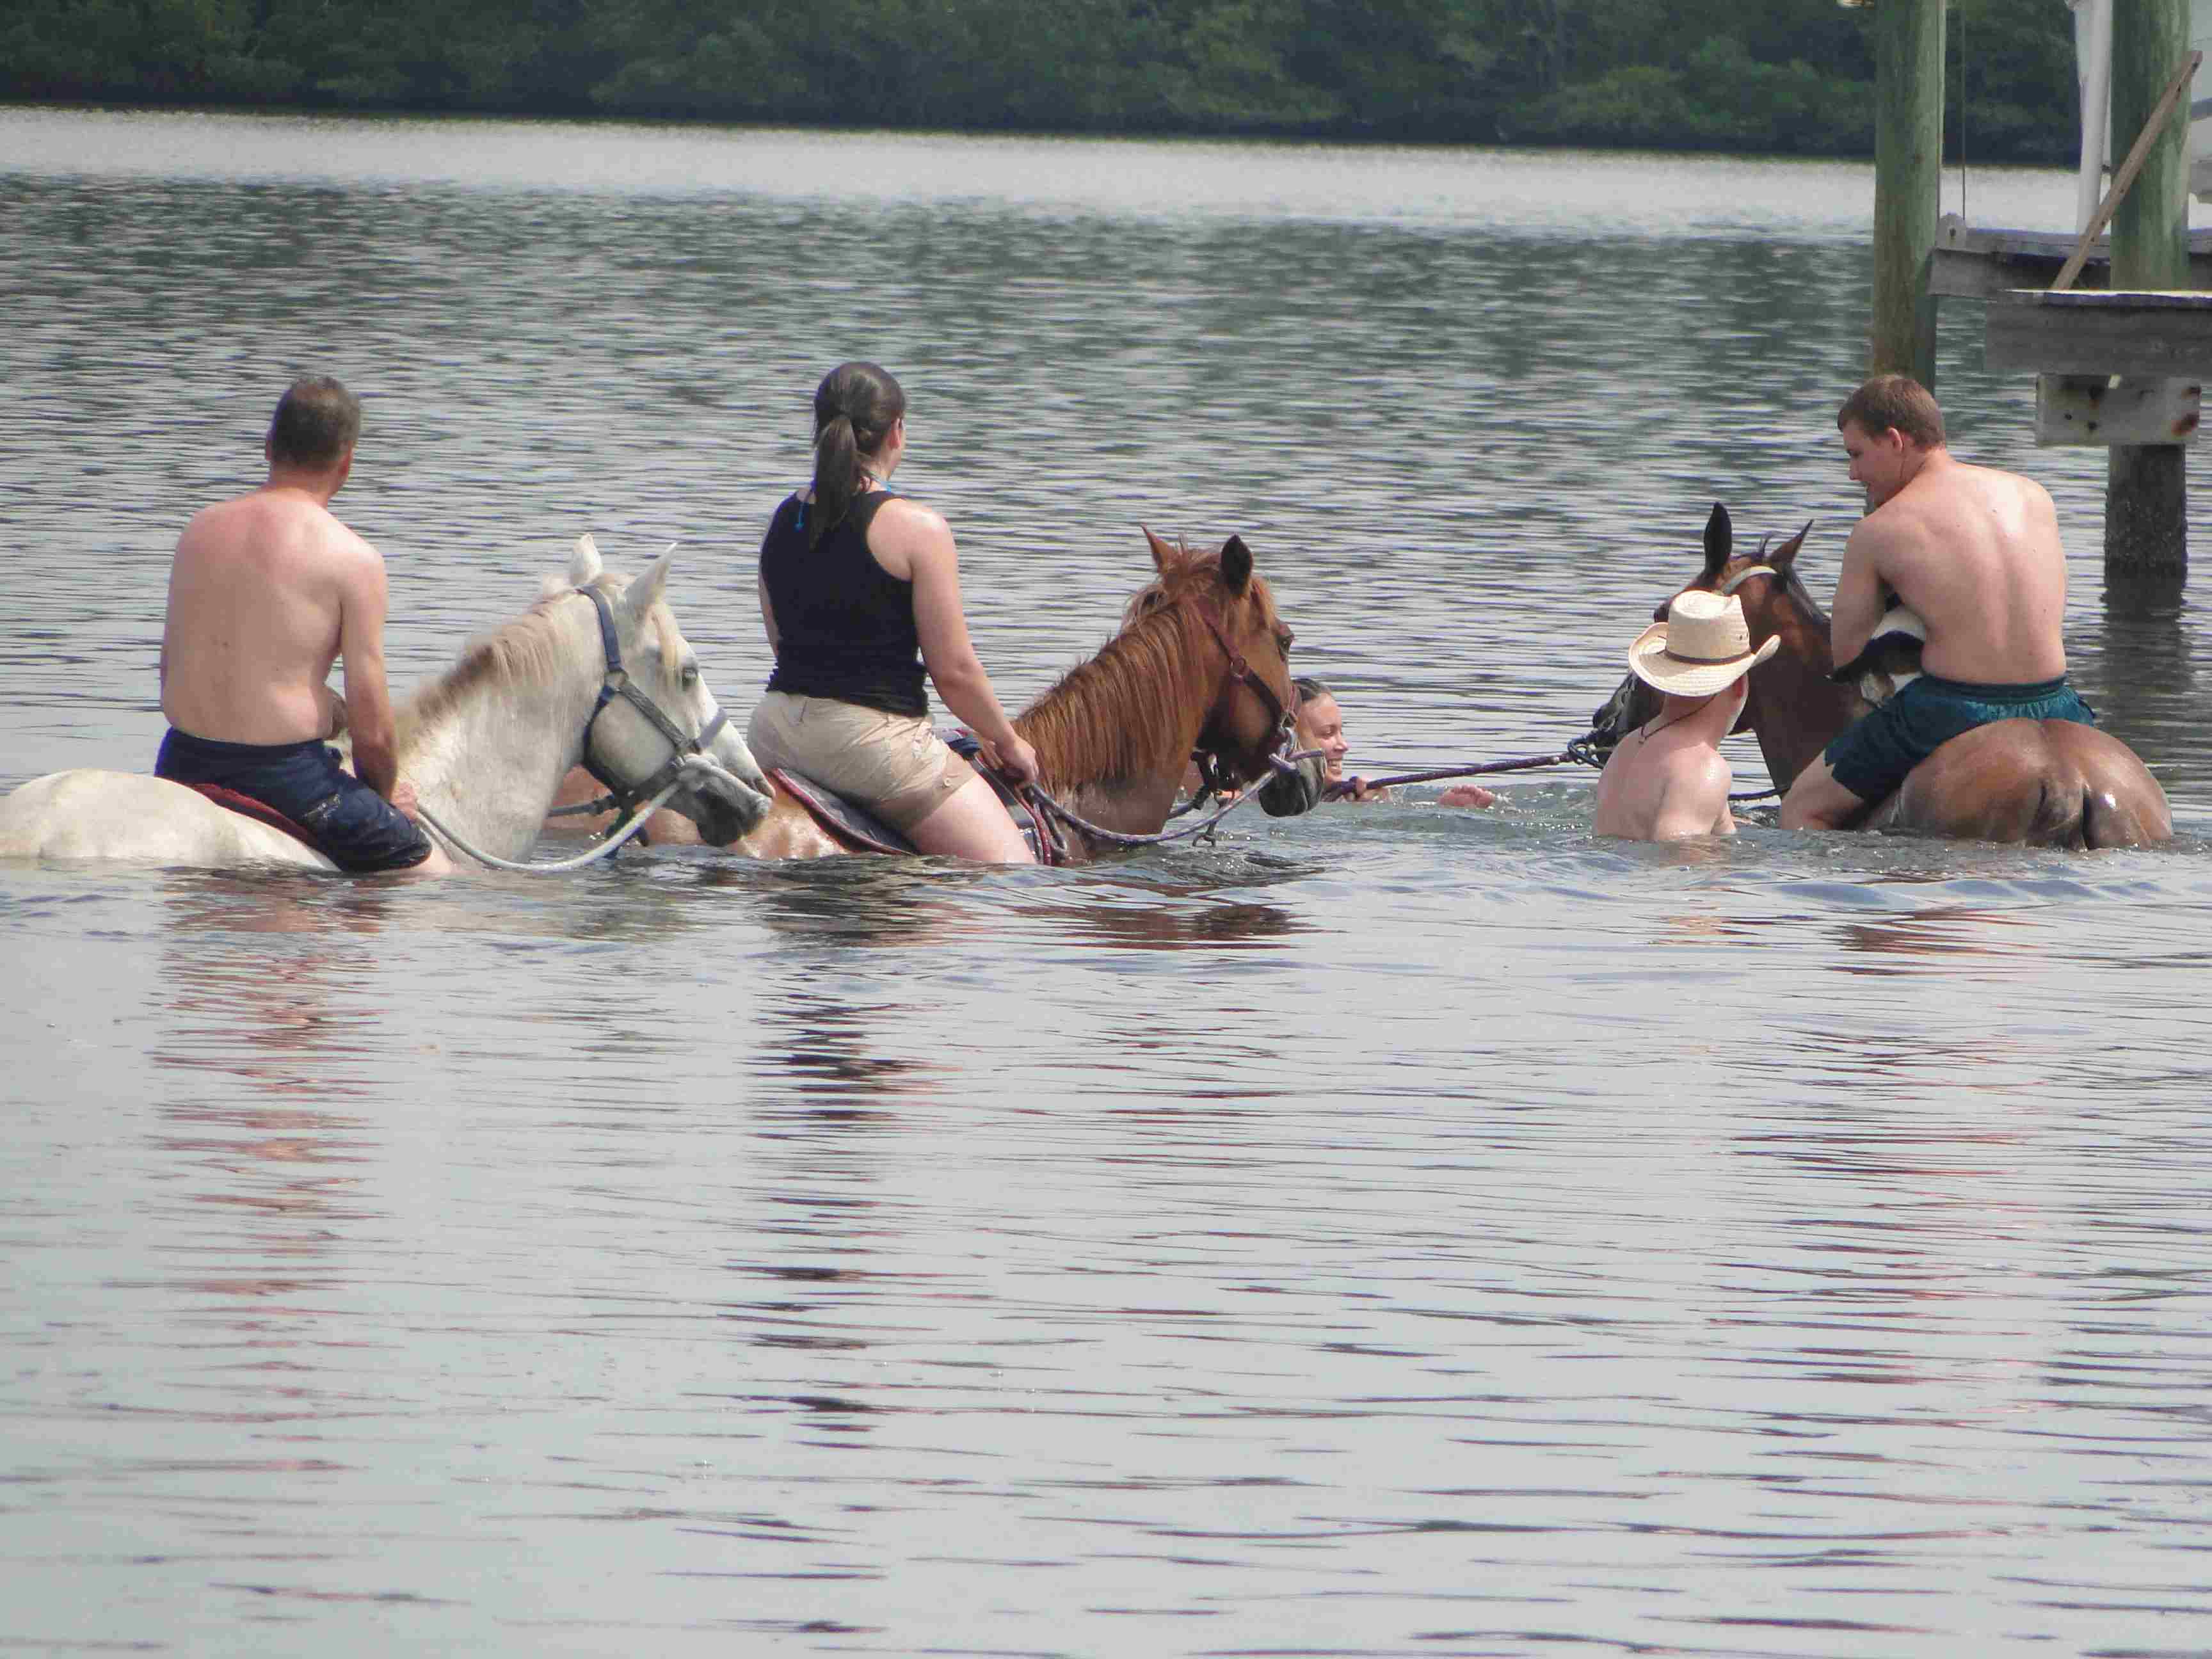 No cavalo ele entra na água: bravos tentam surfar. Foto: Área Bradenton